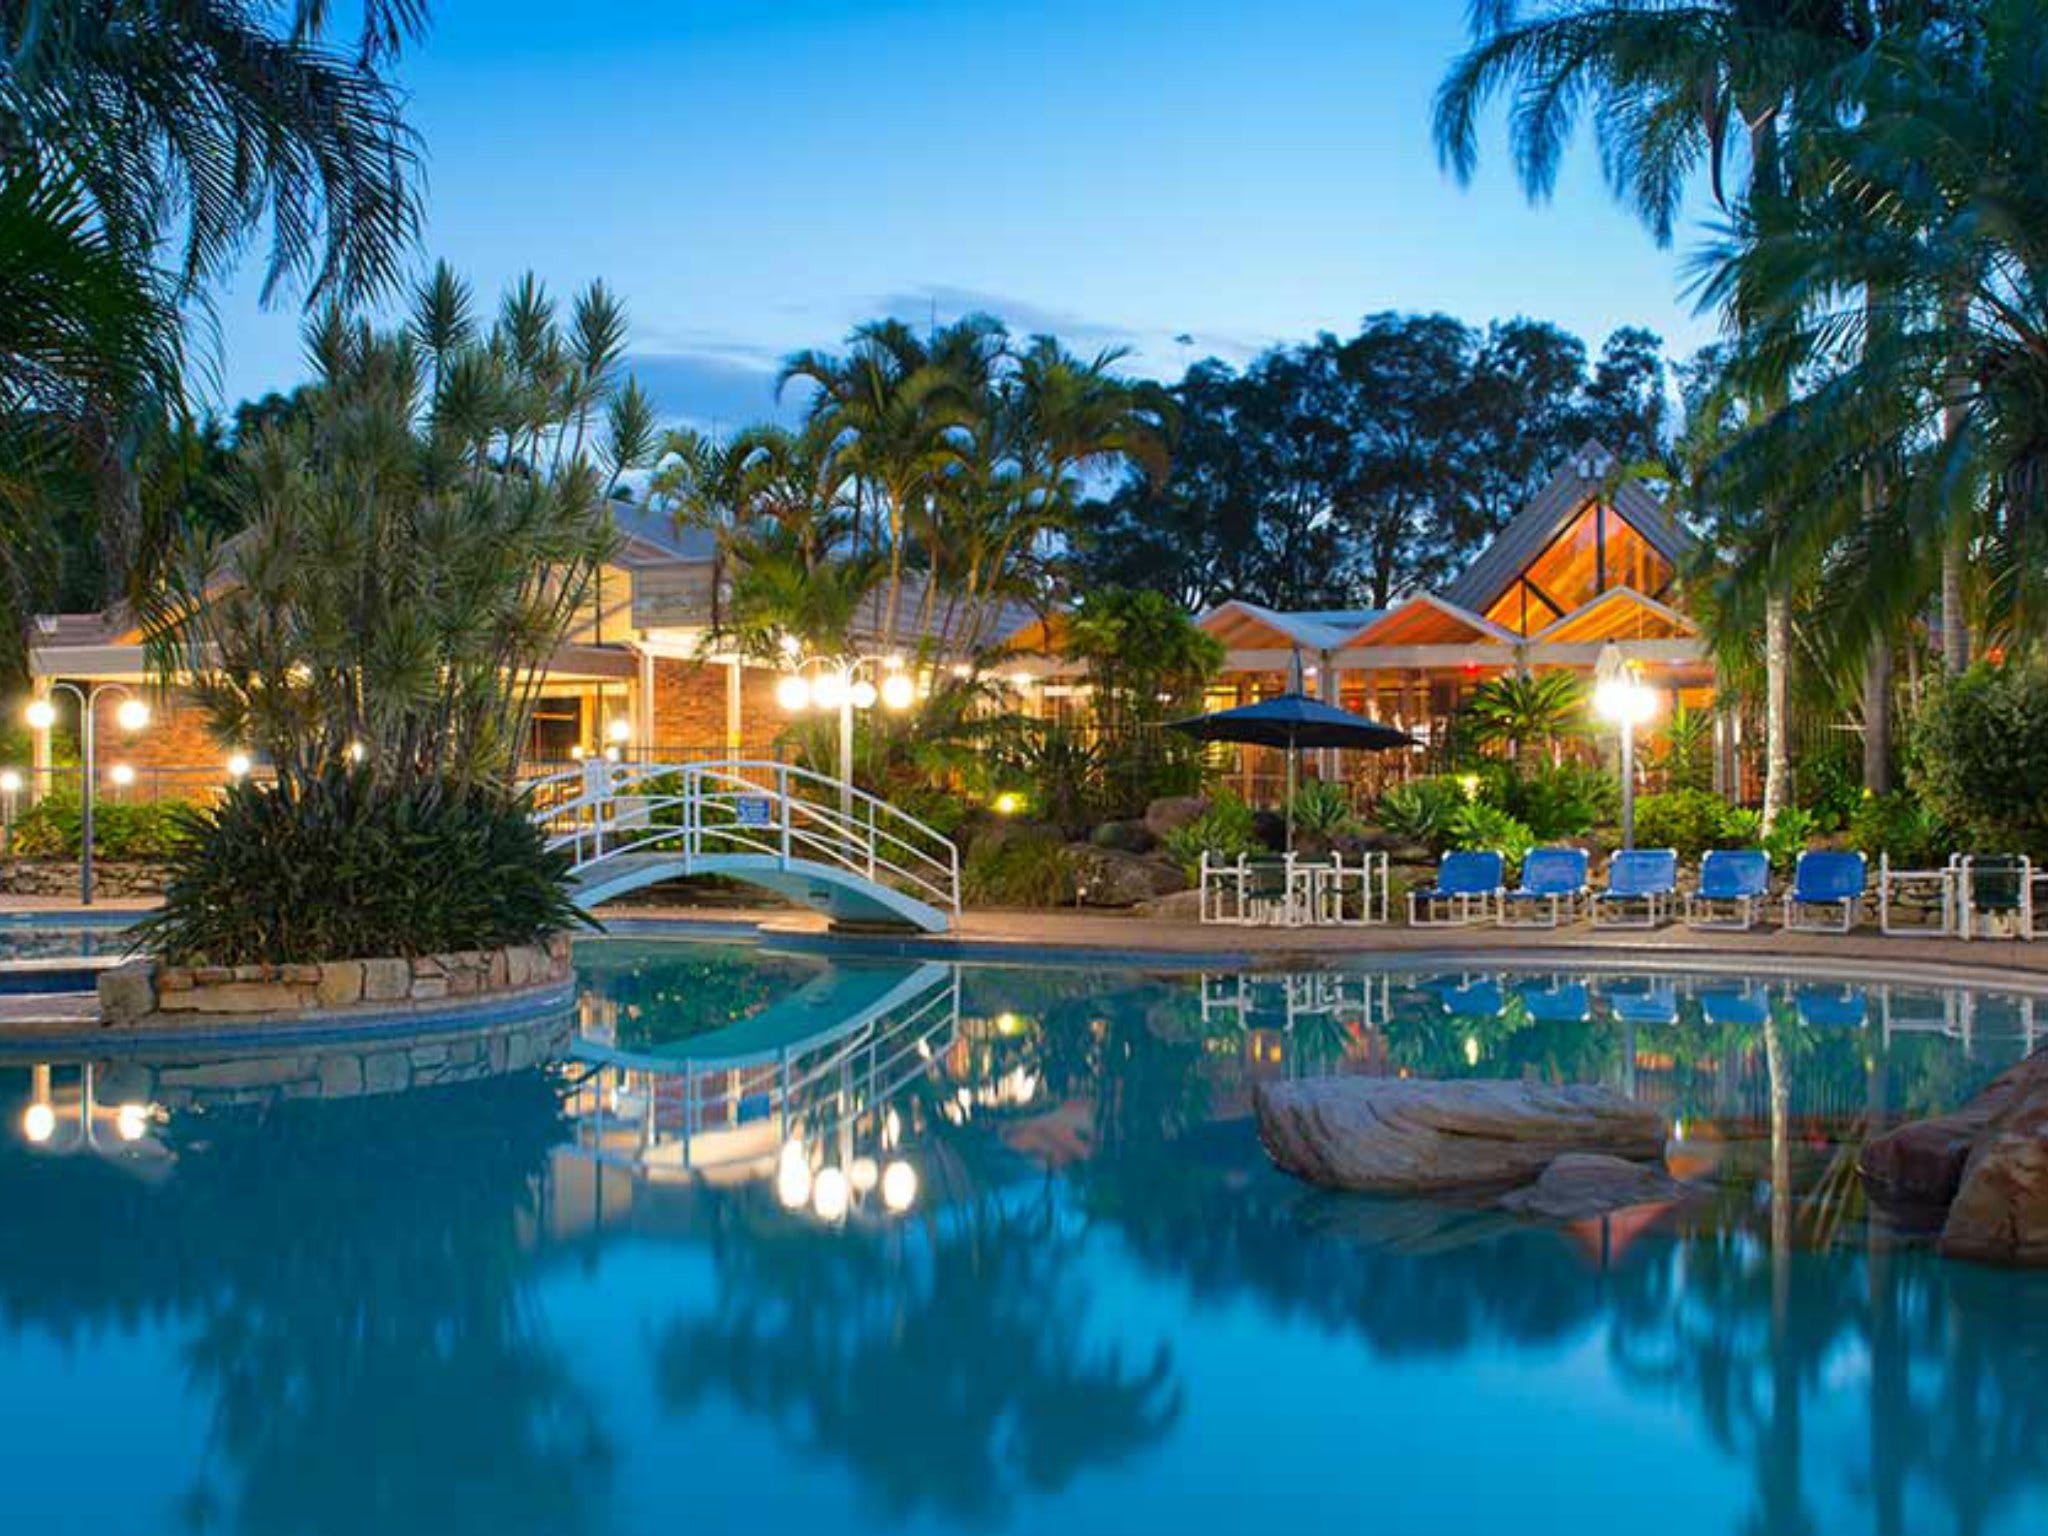 Boambee Bay Resort - Accommodation Resorts